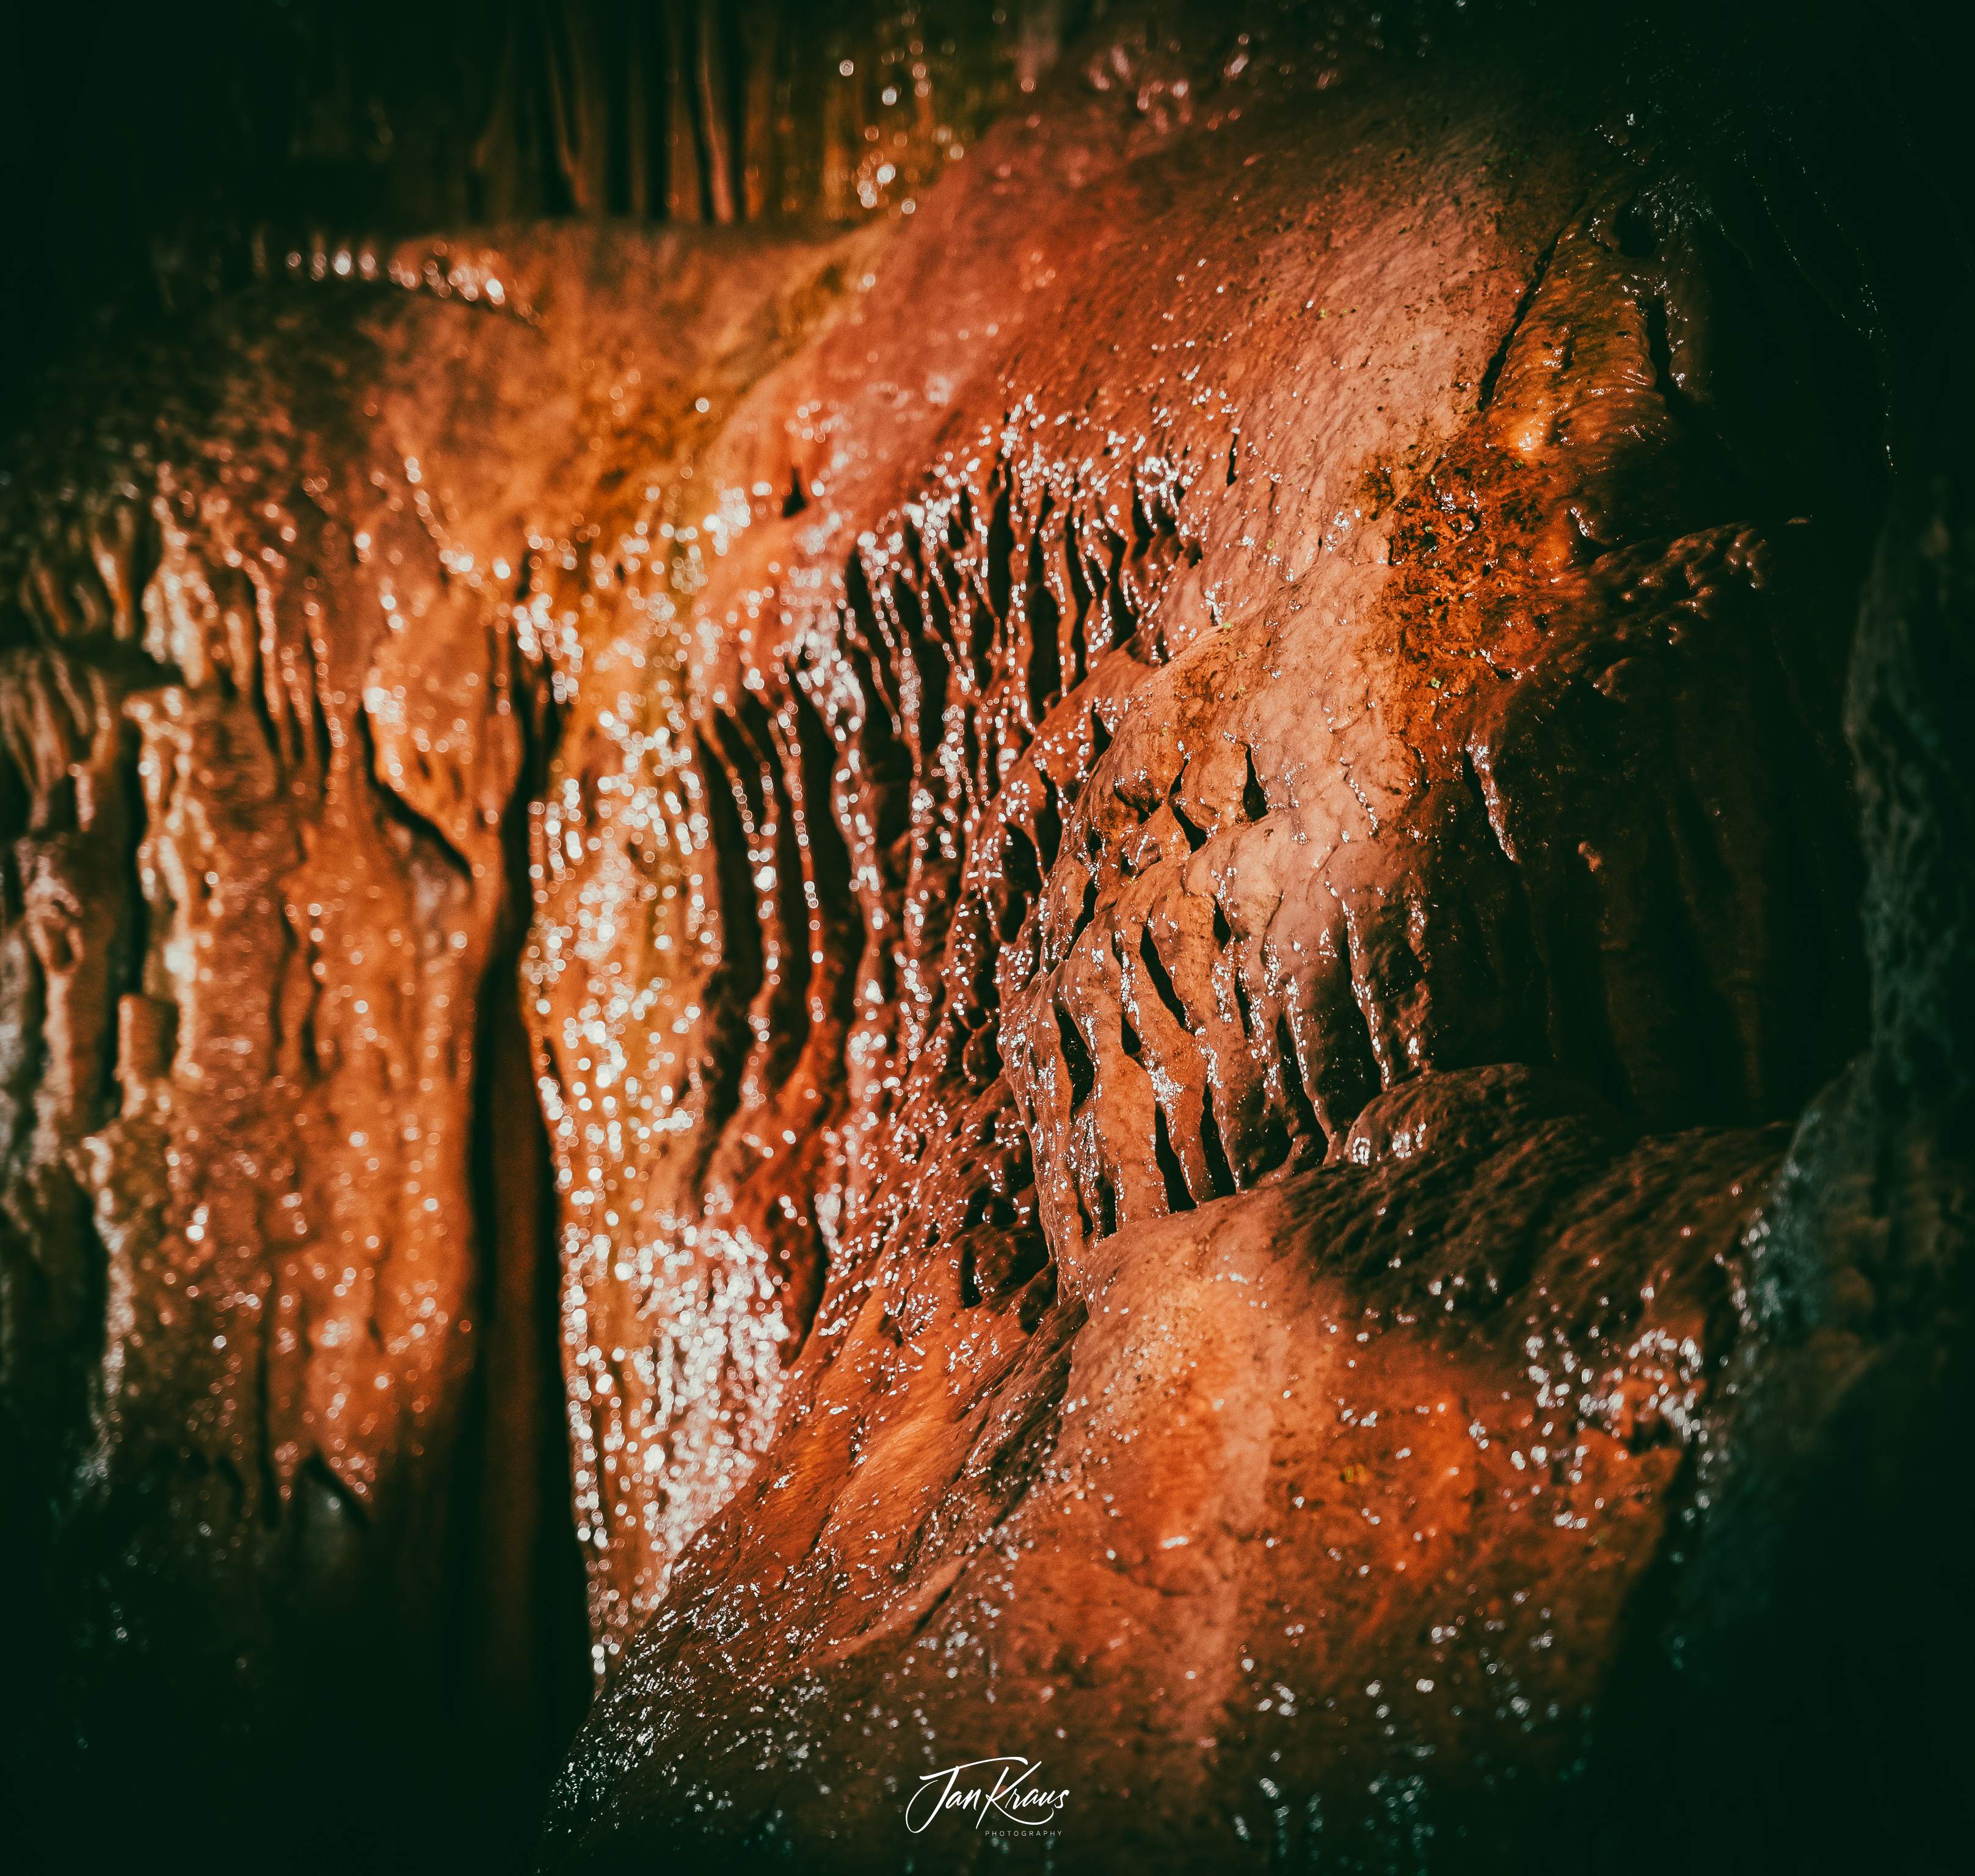 Gough's Cave at Cheddar Gorge, Somerset, England, UK